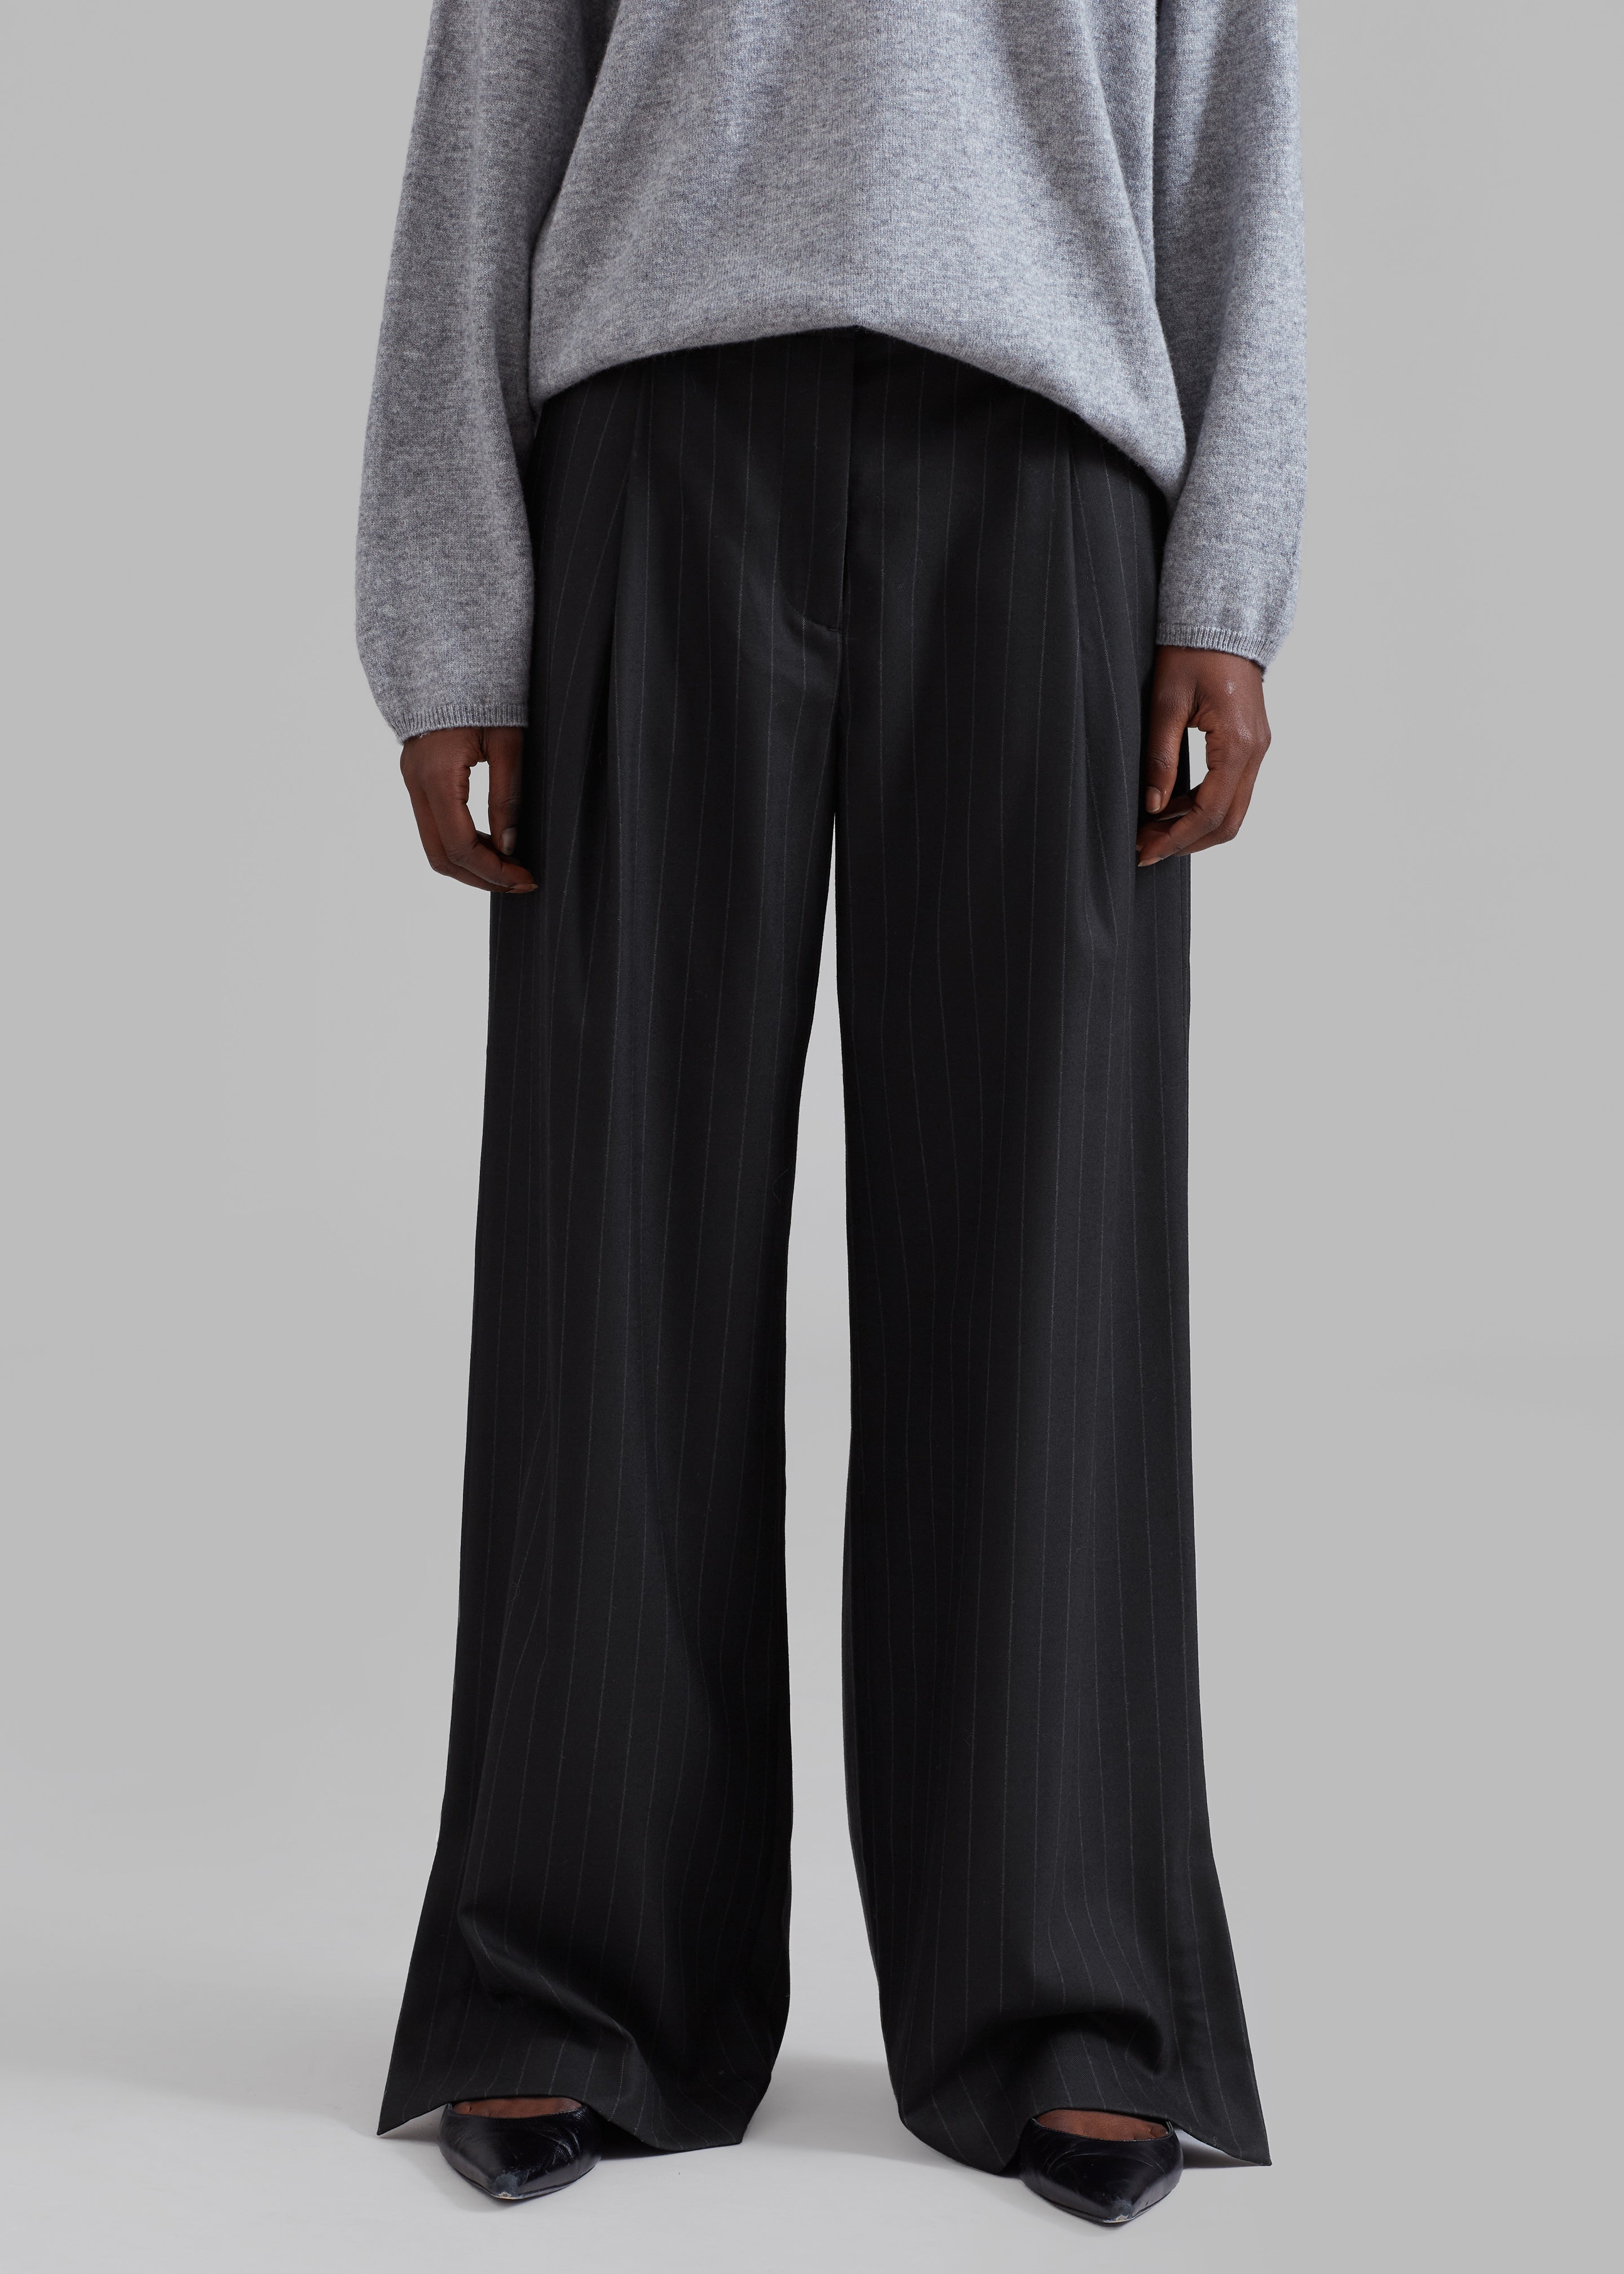 The Garment Chicago Pants - Black Pinstripe - 4